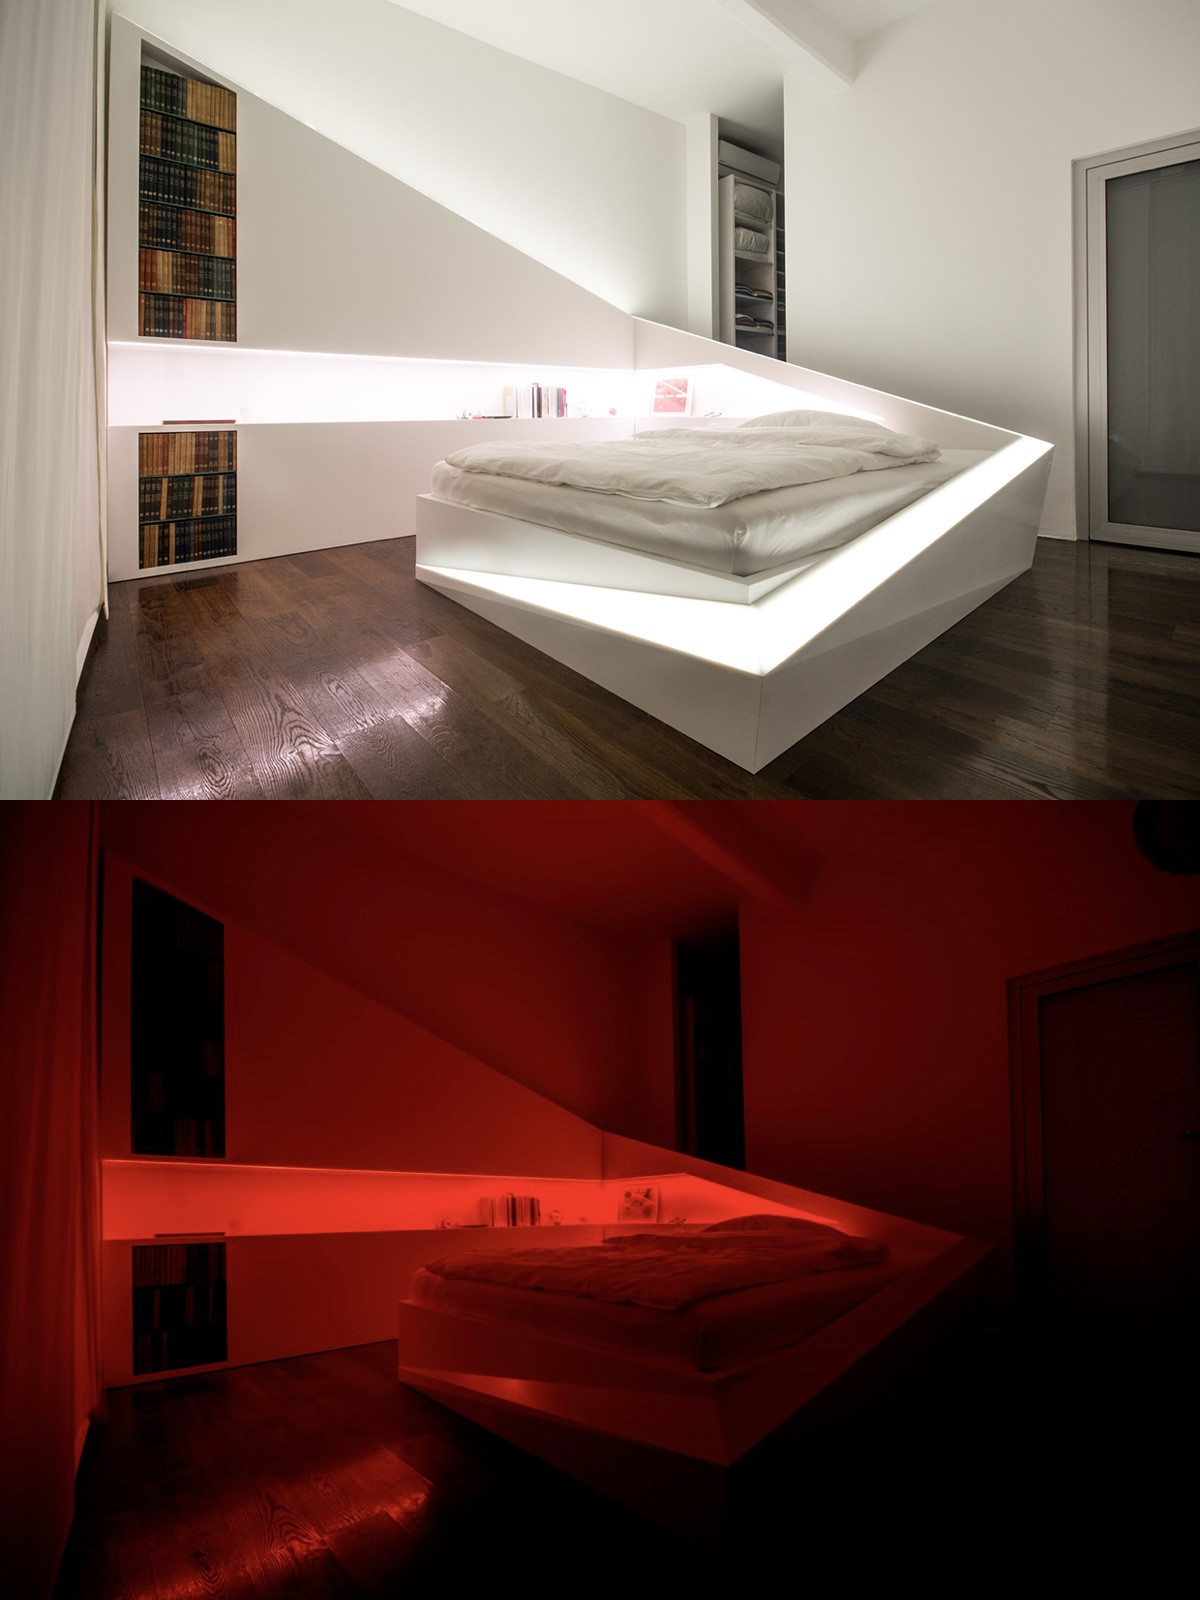 Mood Light Bedroom
 25 Stunning Bedroom Lighting Ideas